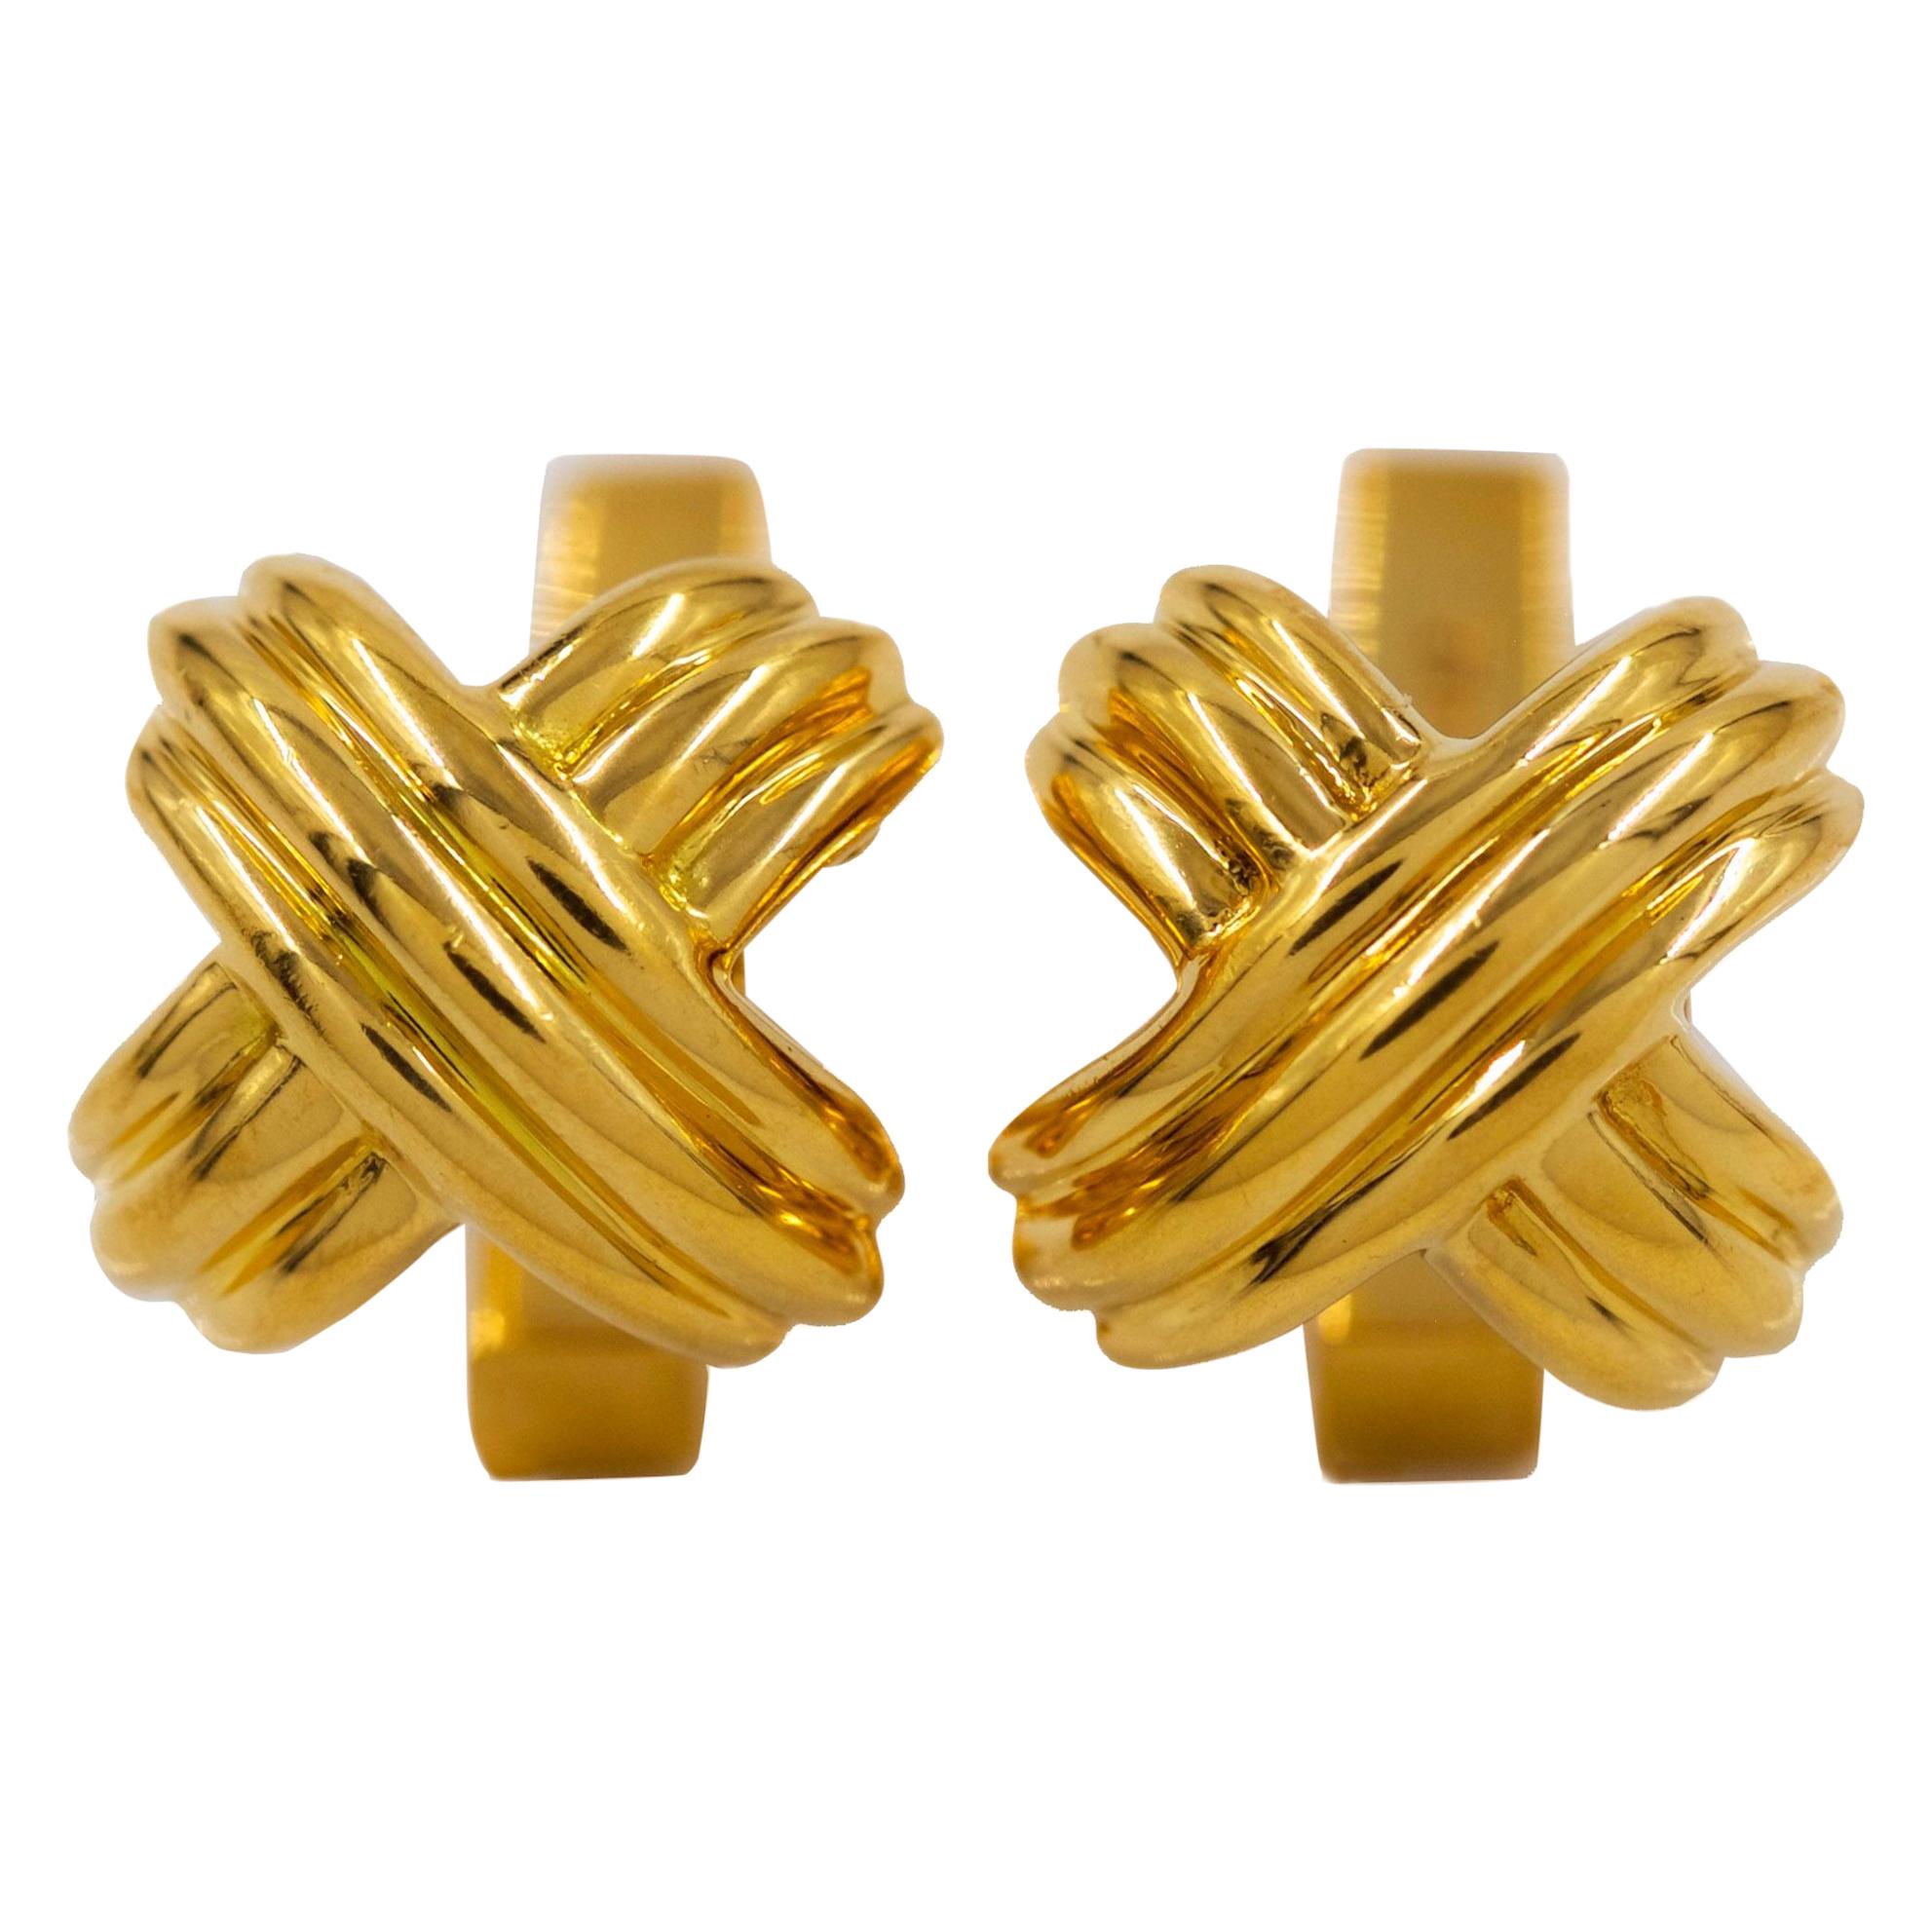 Tiffany & Co. 18k Gold “Signature X” Cufflinks, a Pair